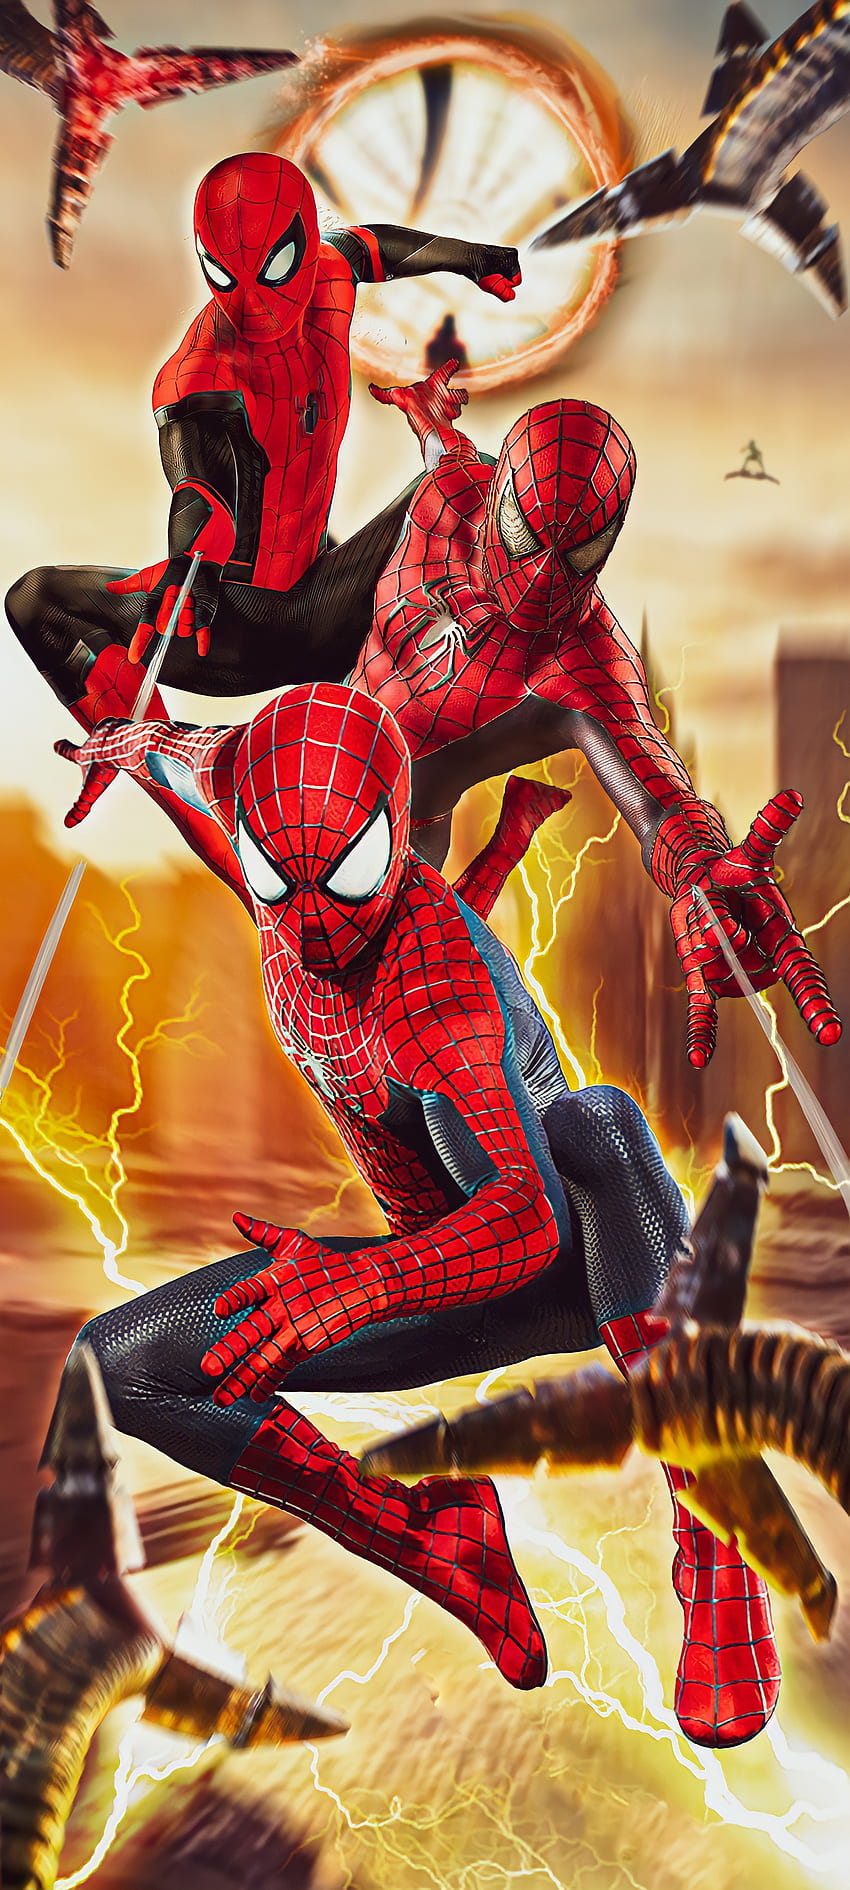 SpiderMan Ps5 game 4K wallpaper download